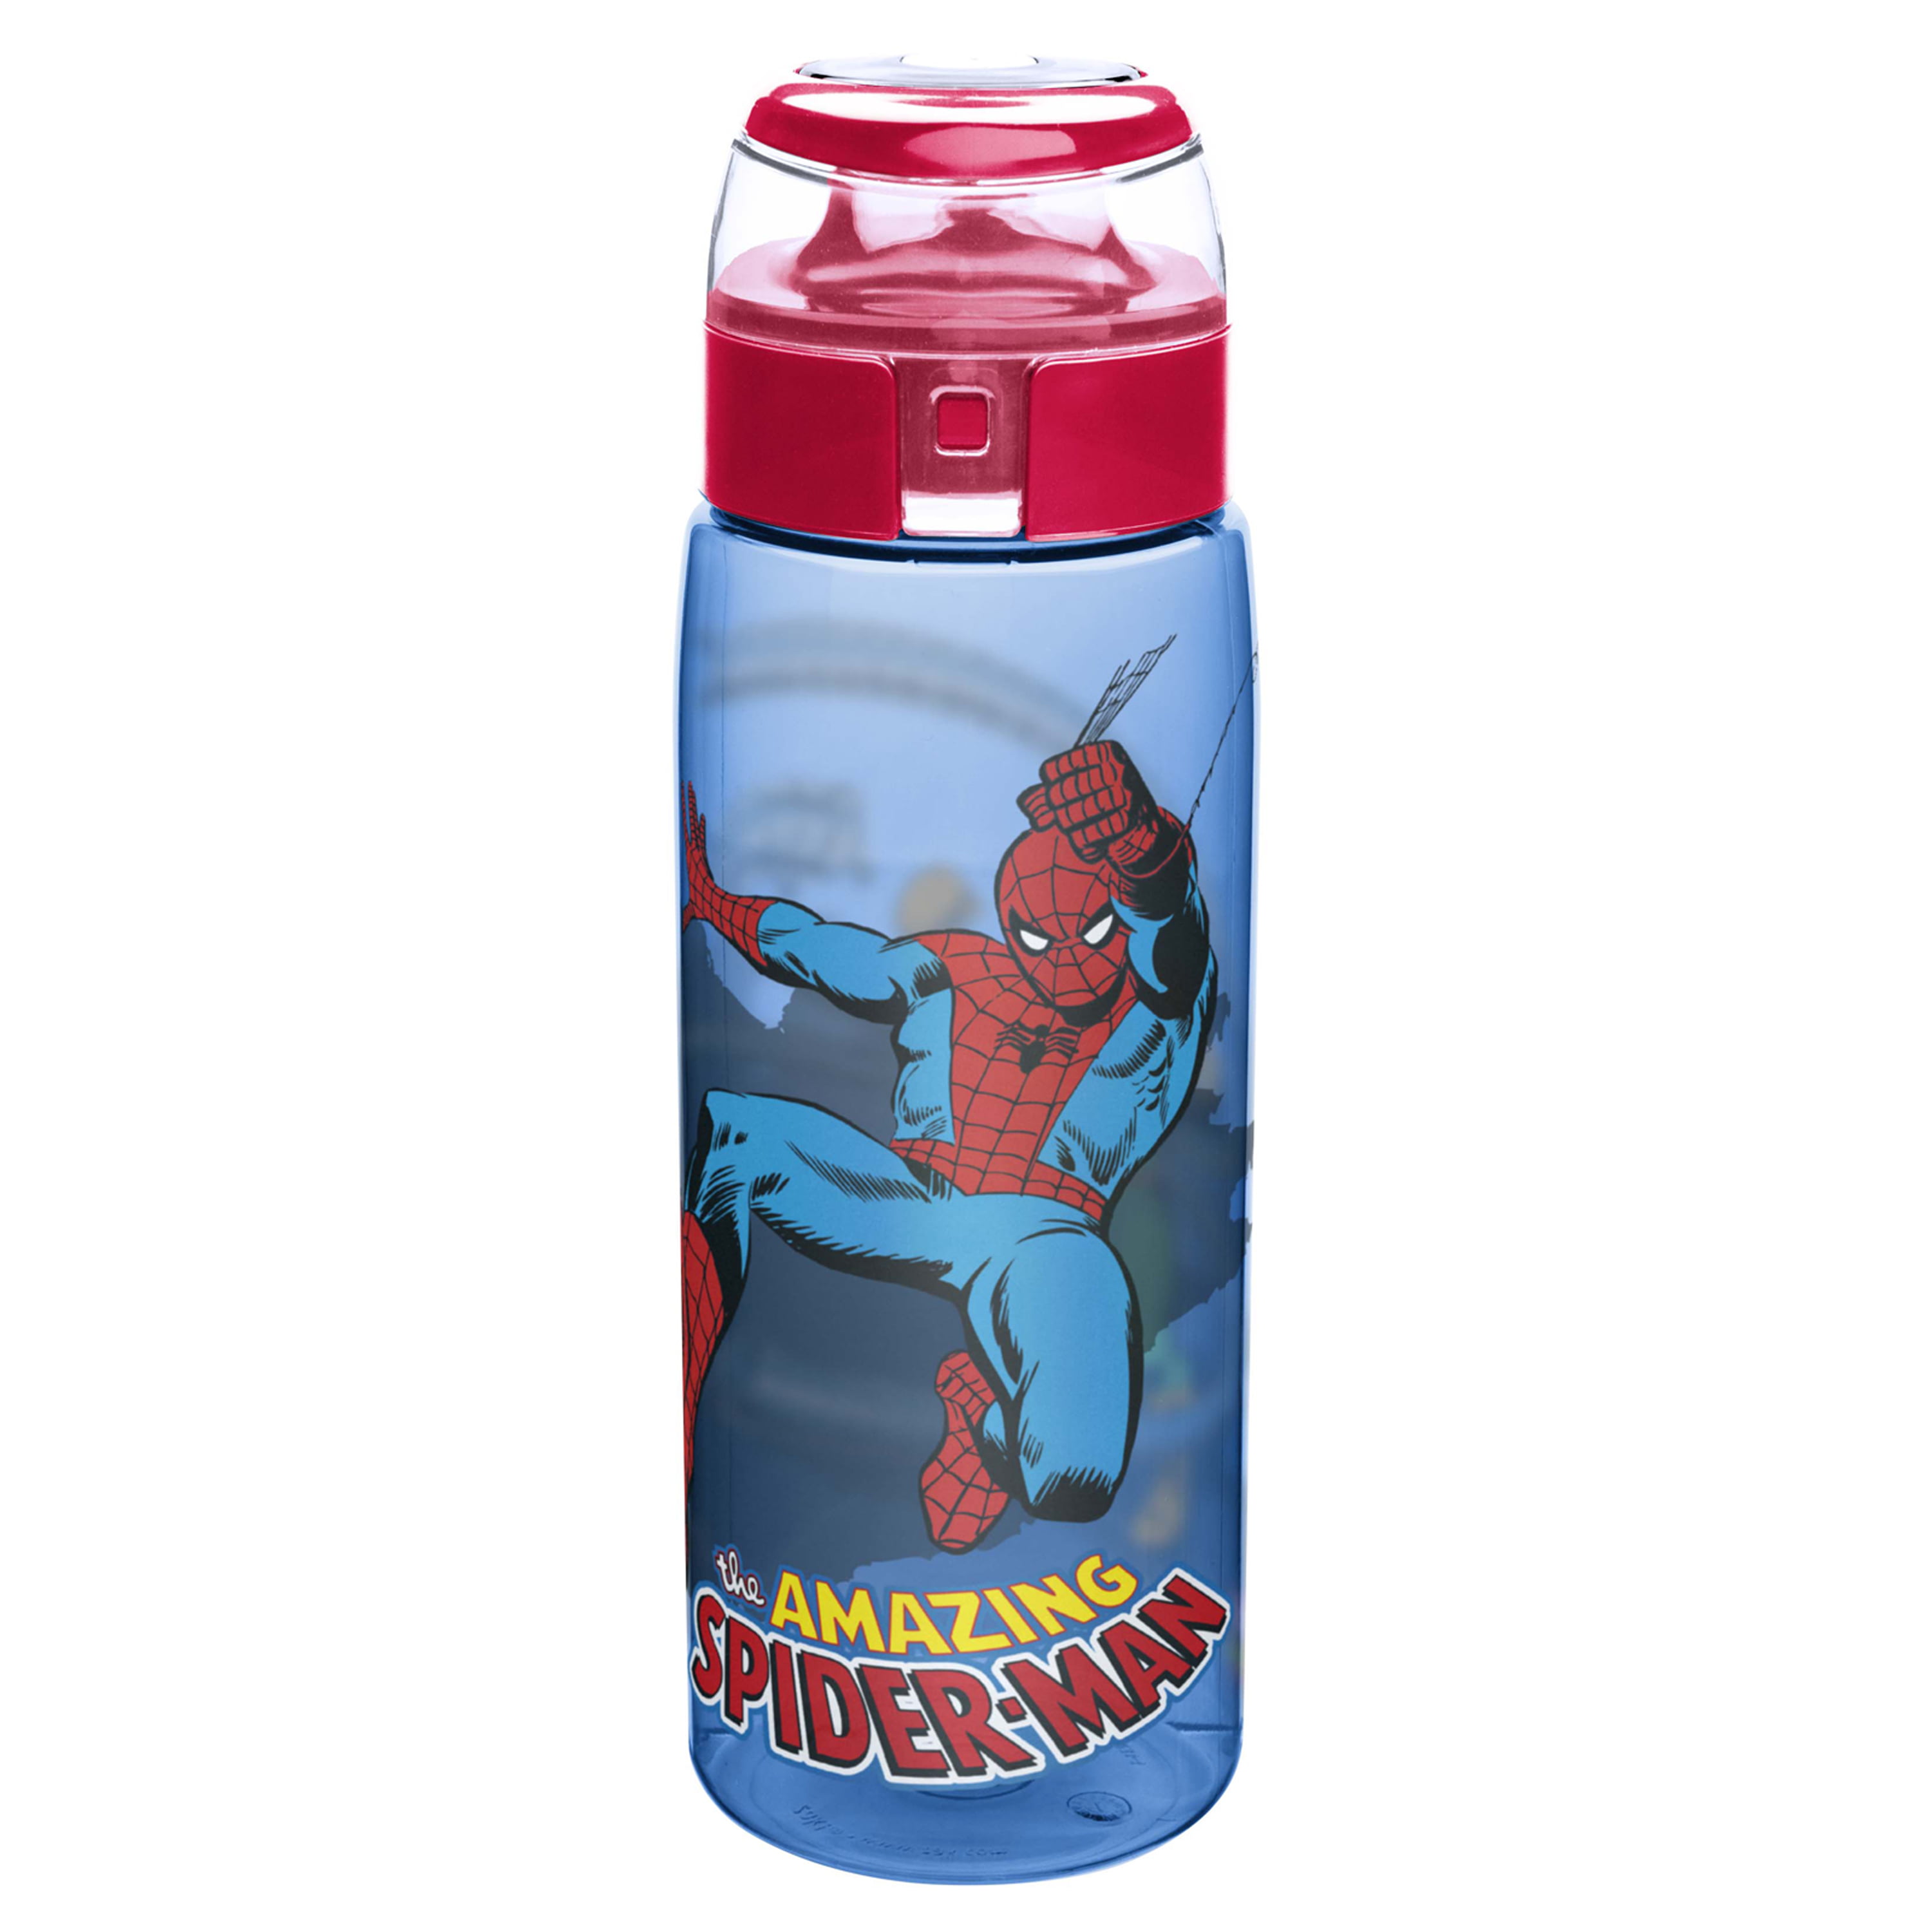 Spider-Man Character 30oz Sullivan Water Bottle Blue